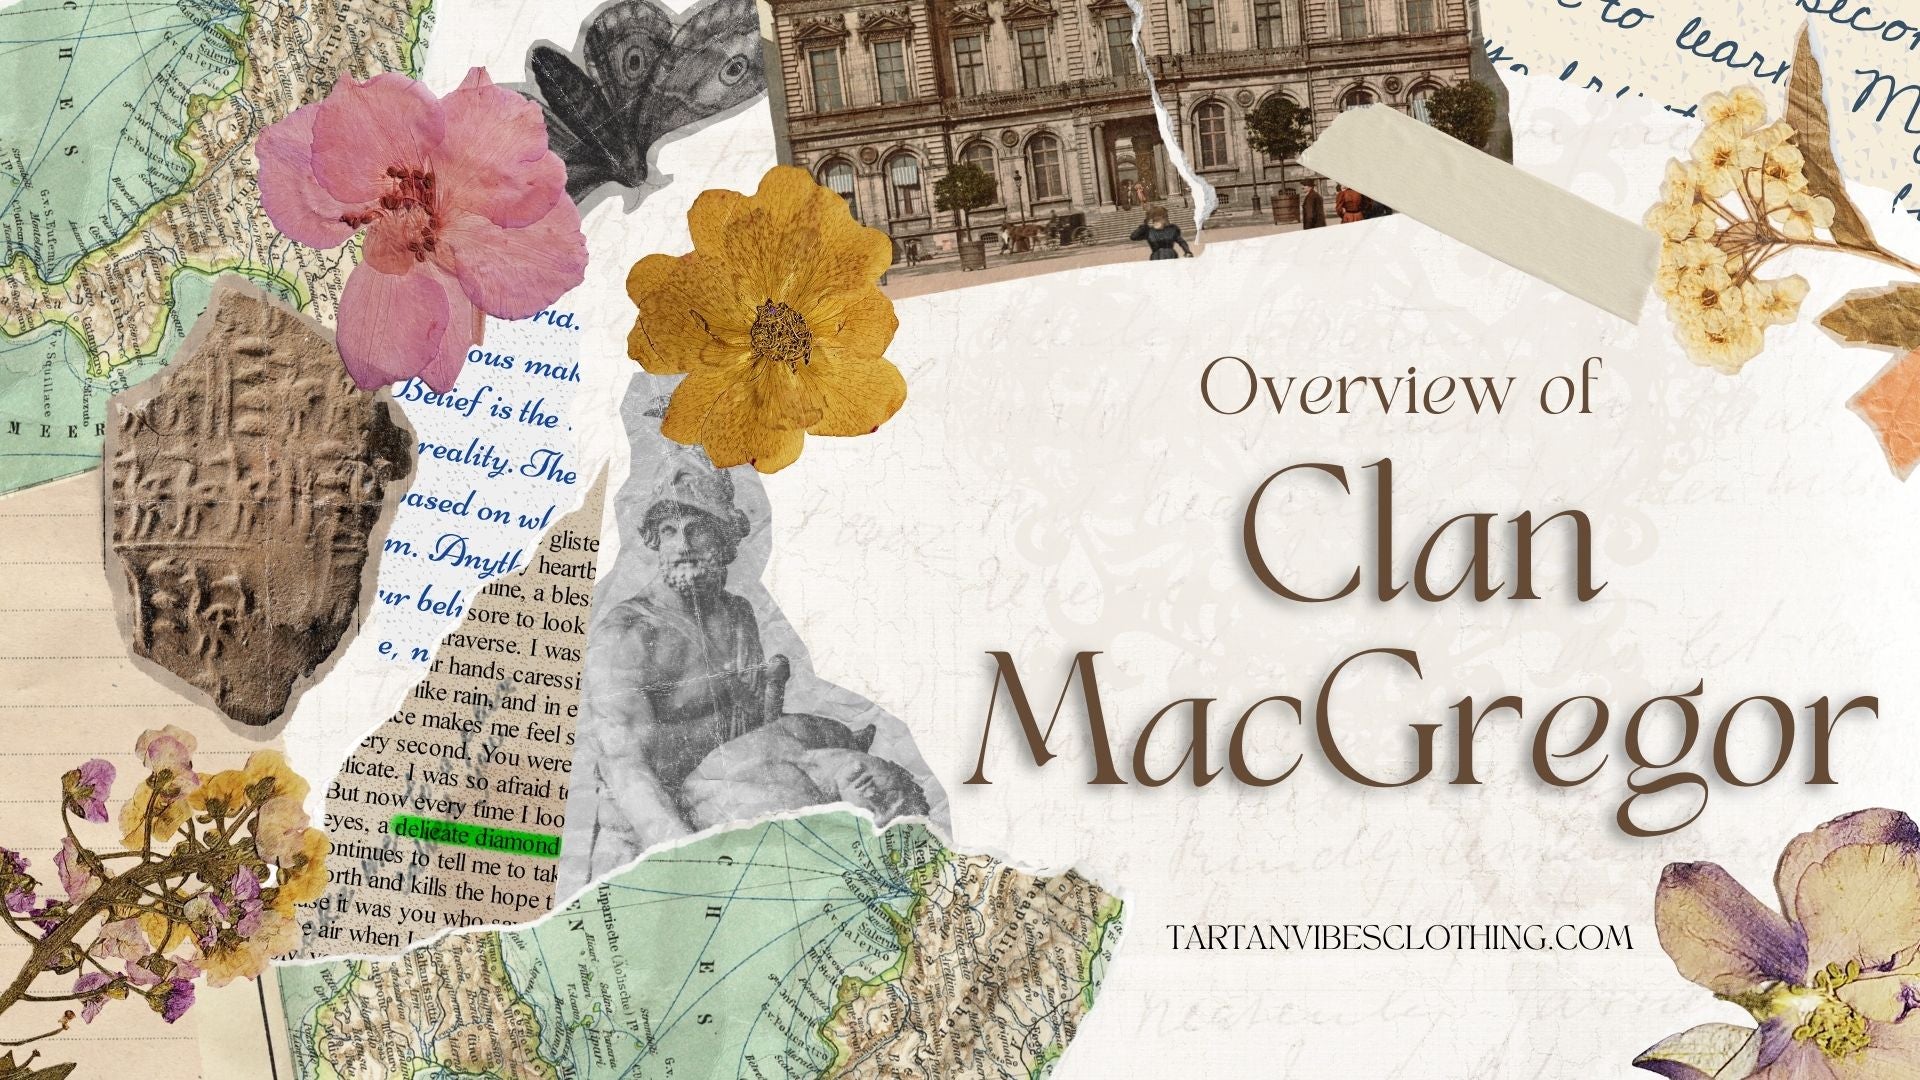 A Brief Overview of Clan MacGregor